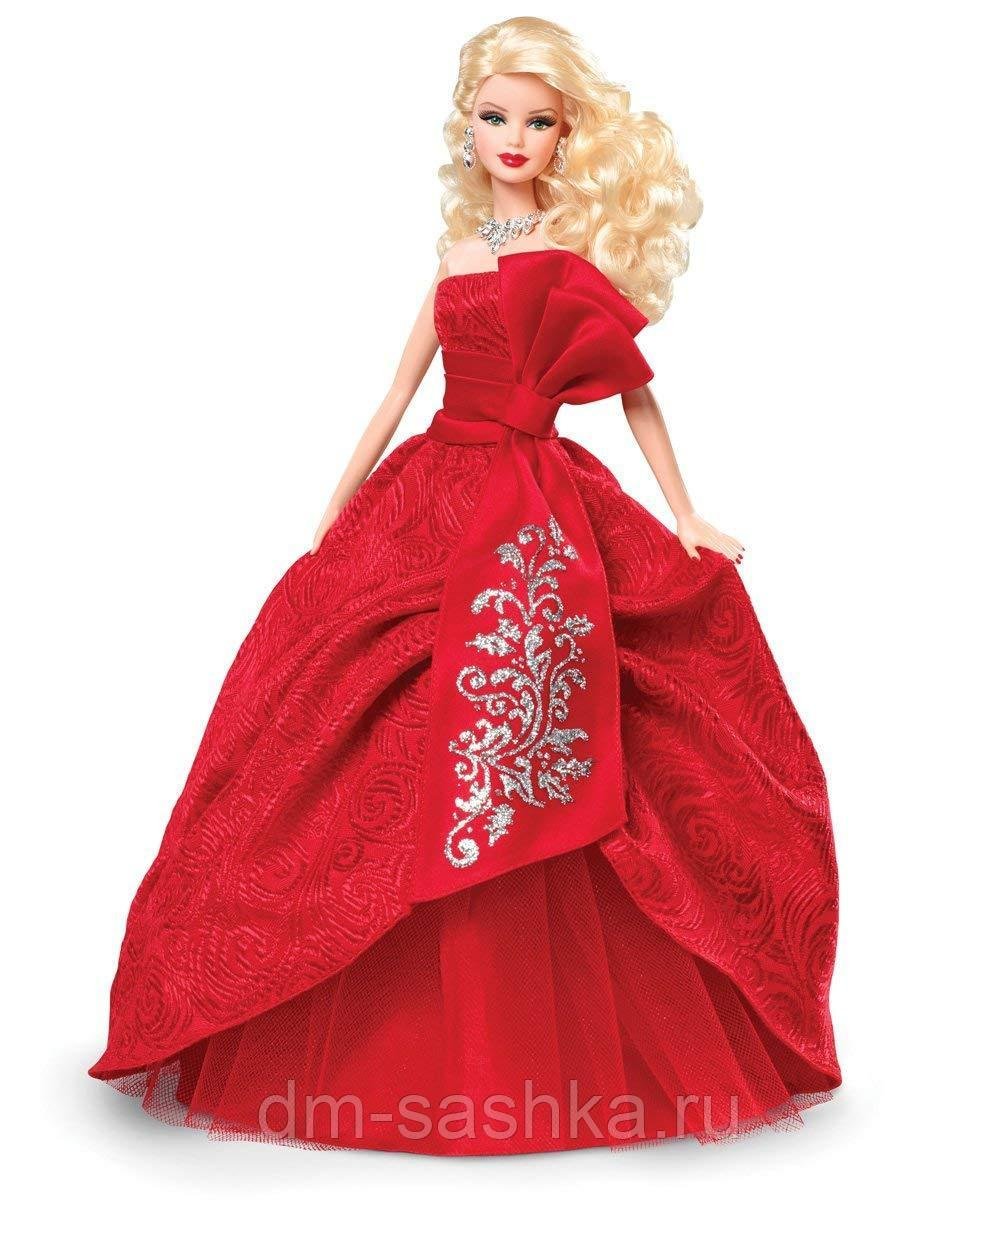 Barbie Doll | Red Barbie | Toy | Doll